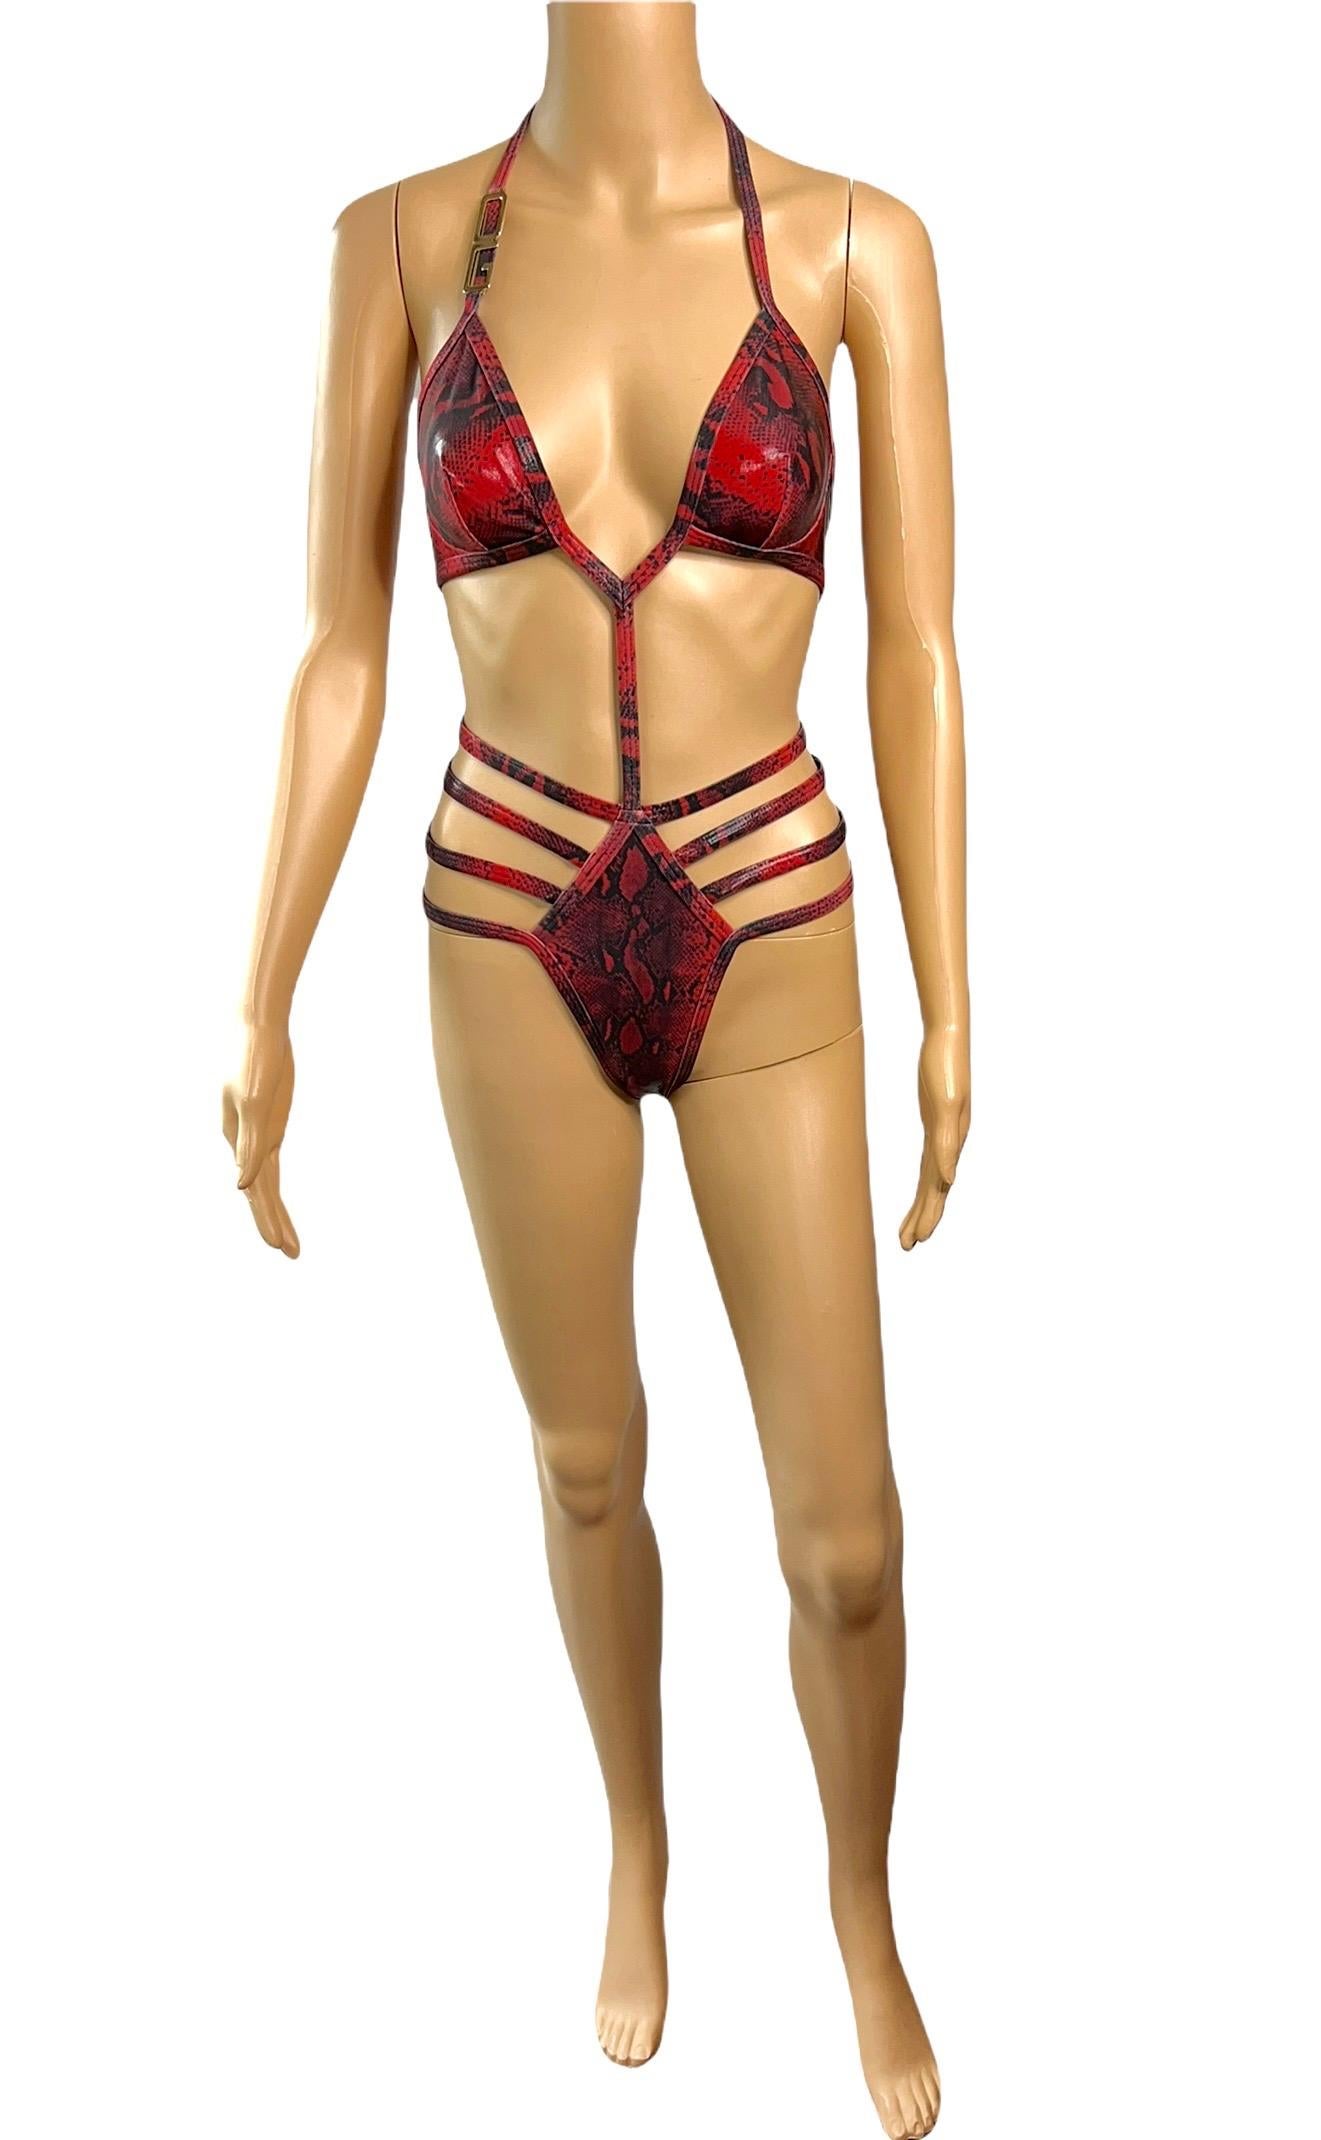 Dolce & Gabbana Unworn Logo Cutout Strappy Bodysuit Monokini Swimsuit Swimwear

Size 1

Condition: New with Tags
